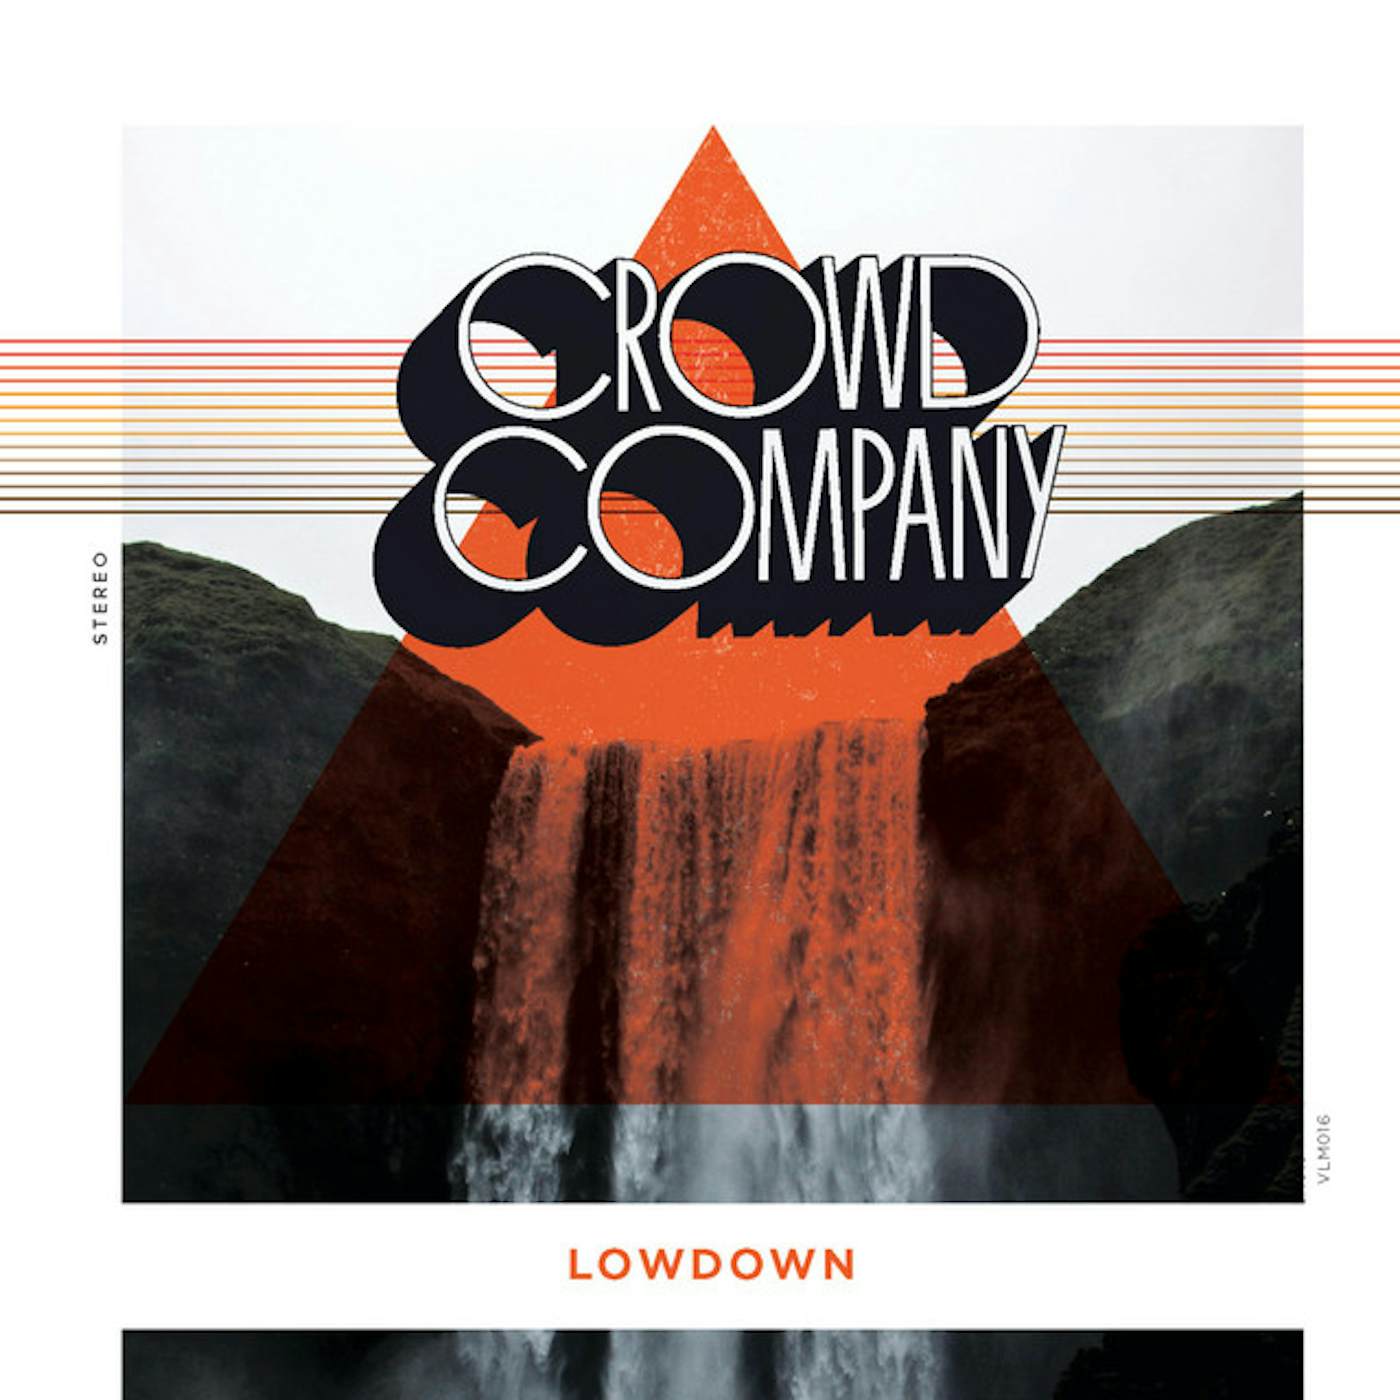 Crowd Company Lowdown Vinyl Record